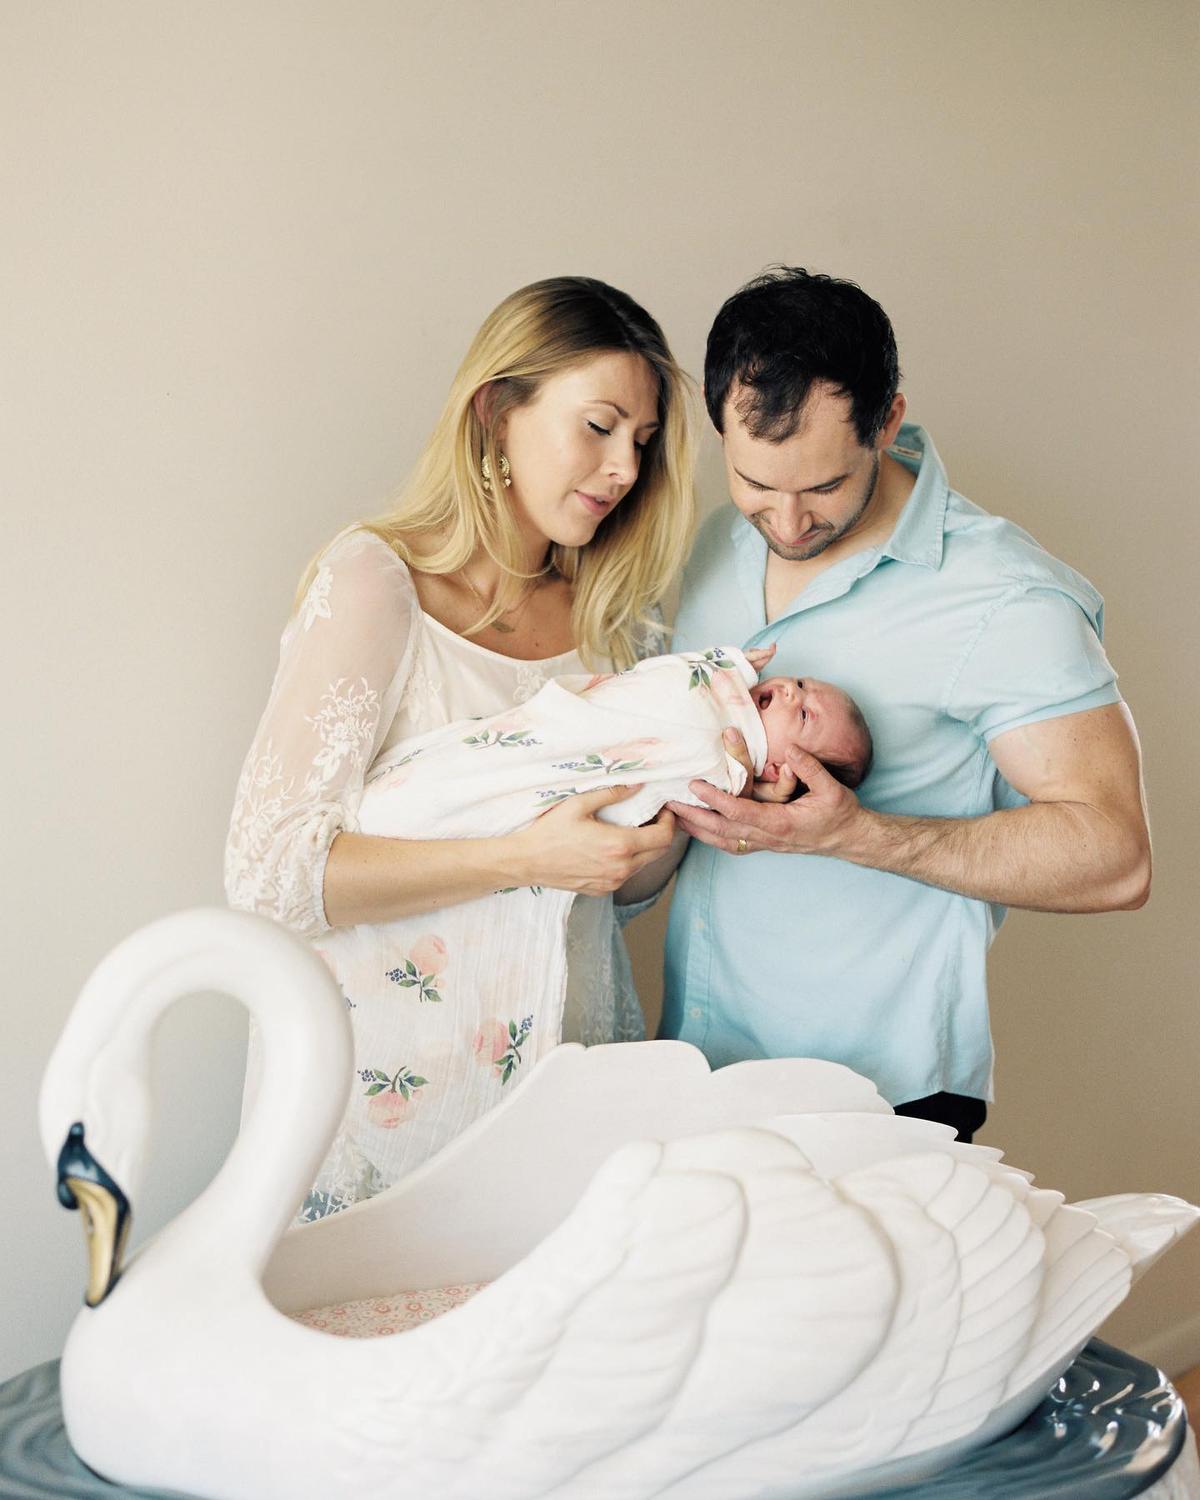 Hannah and Jake holding their first baby, Emma. (Courtesy of Hannah Weidmann)